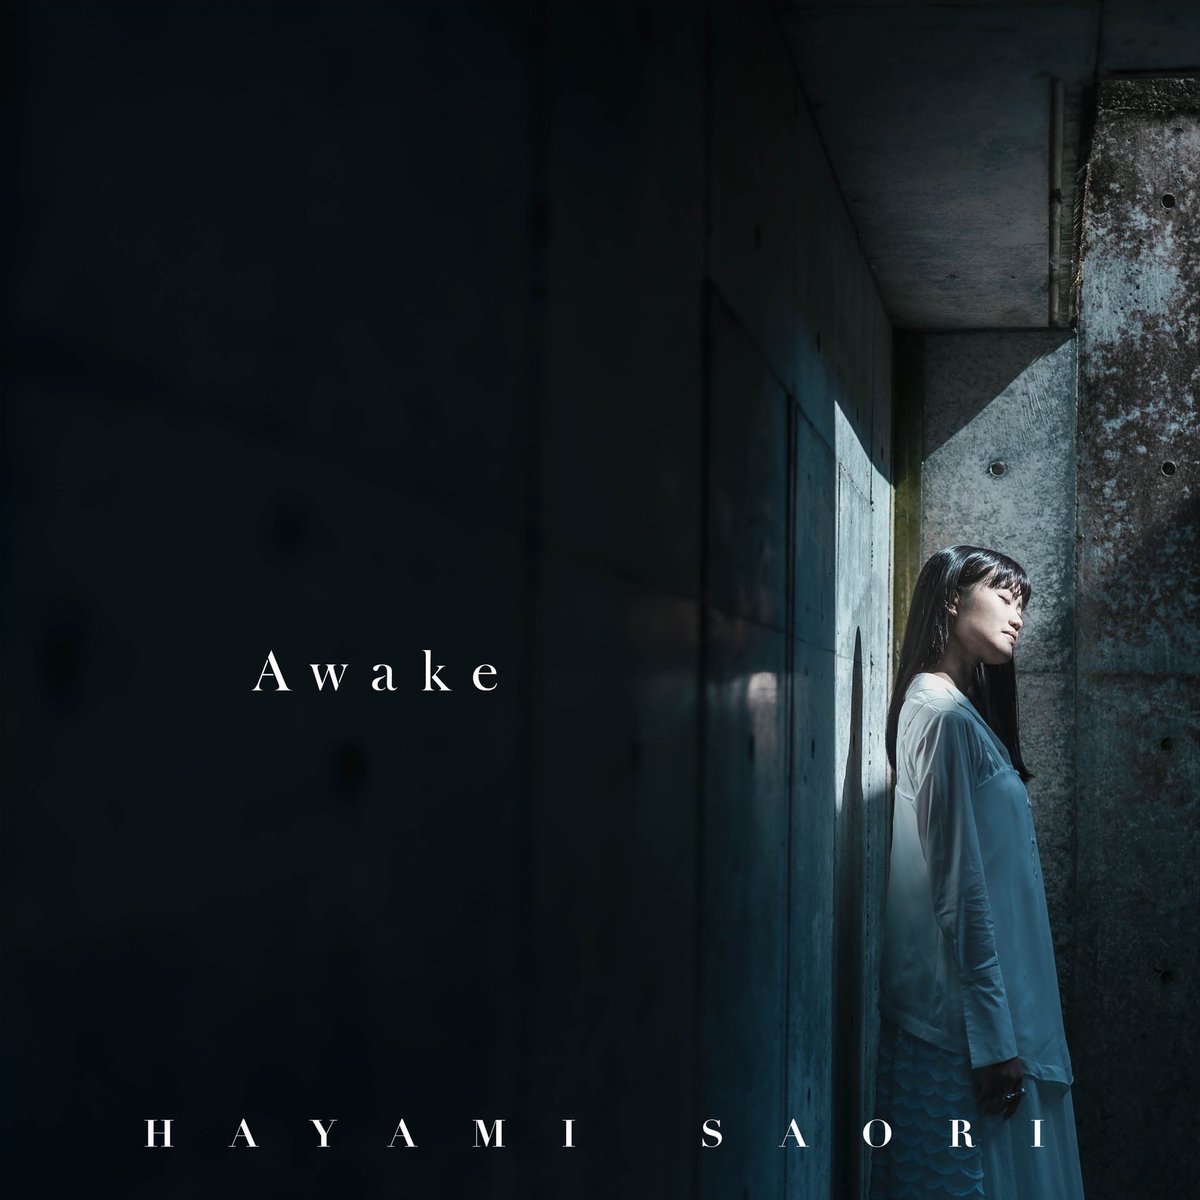 Cover art for『Saori Hayami - Awake』from the release『Awake